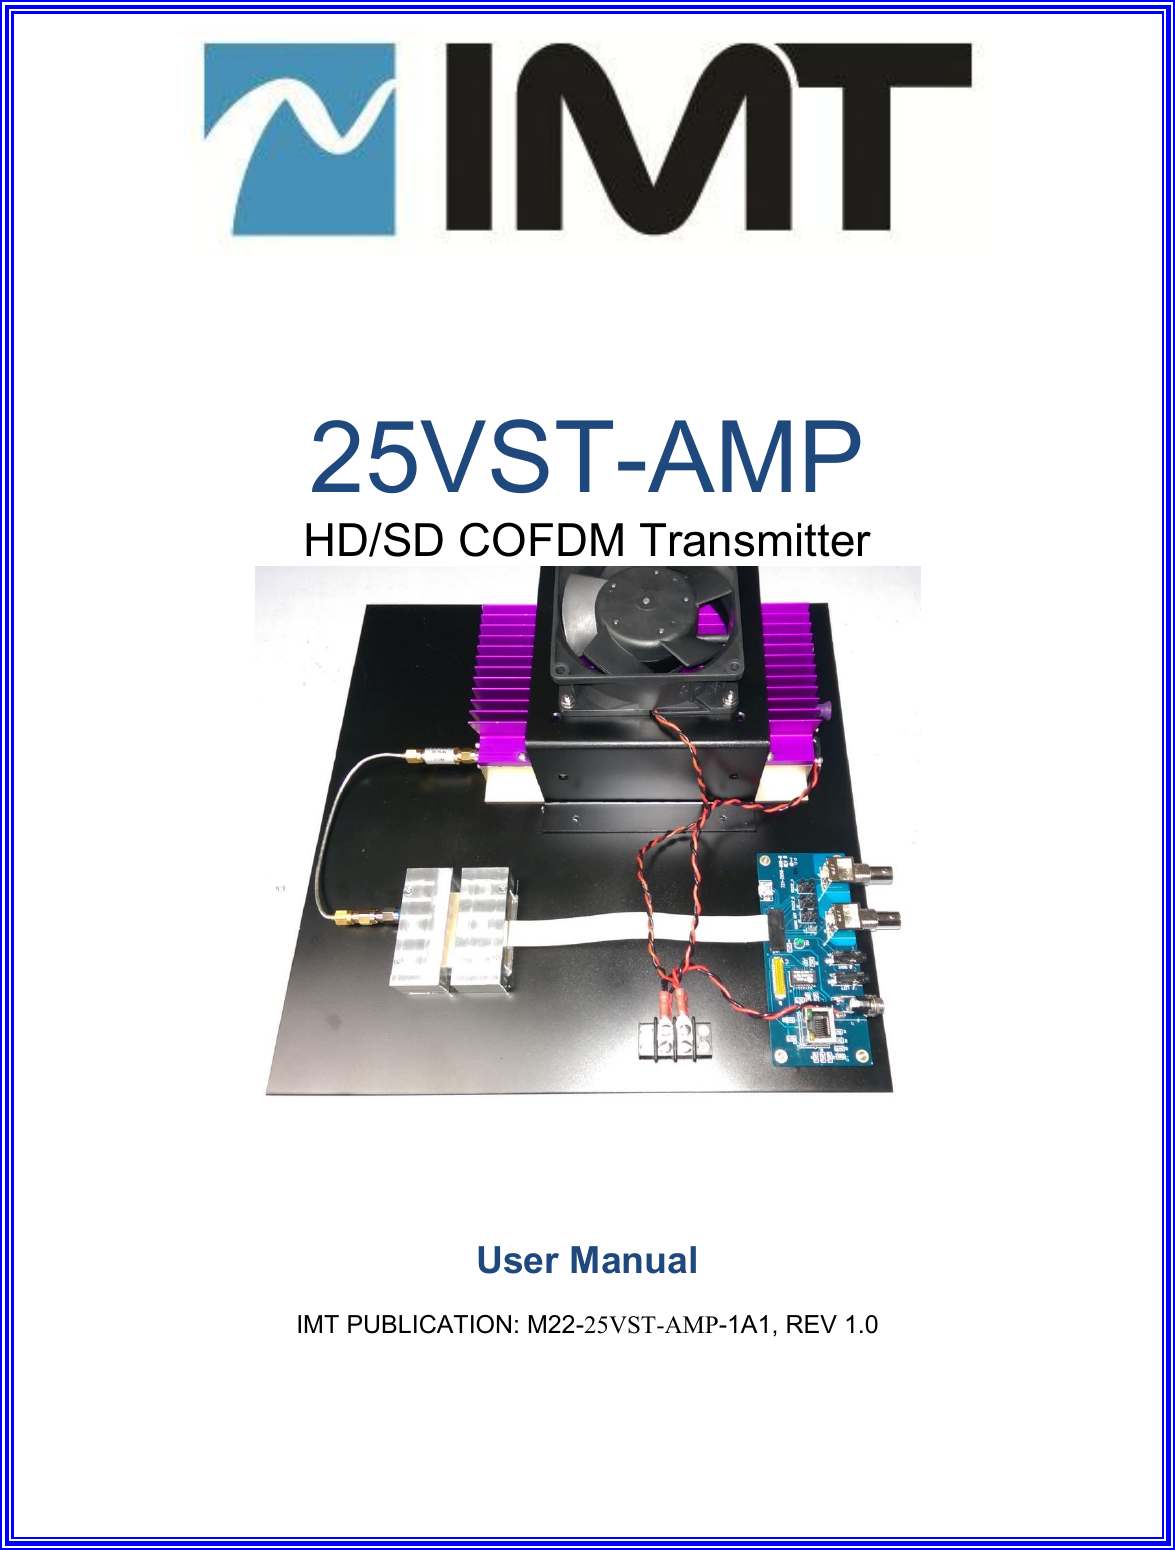        25VST-AMP HD/SD COFDM Transmitter       User Manual  IMT PUBLICATION: M22-25VST-AMP-1A1, REV 1.0     